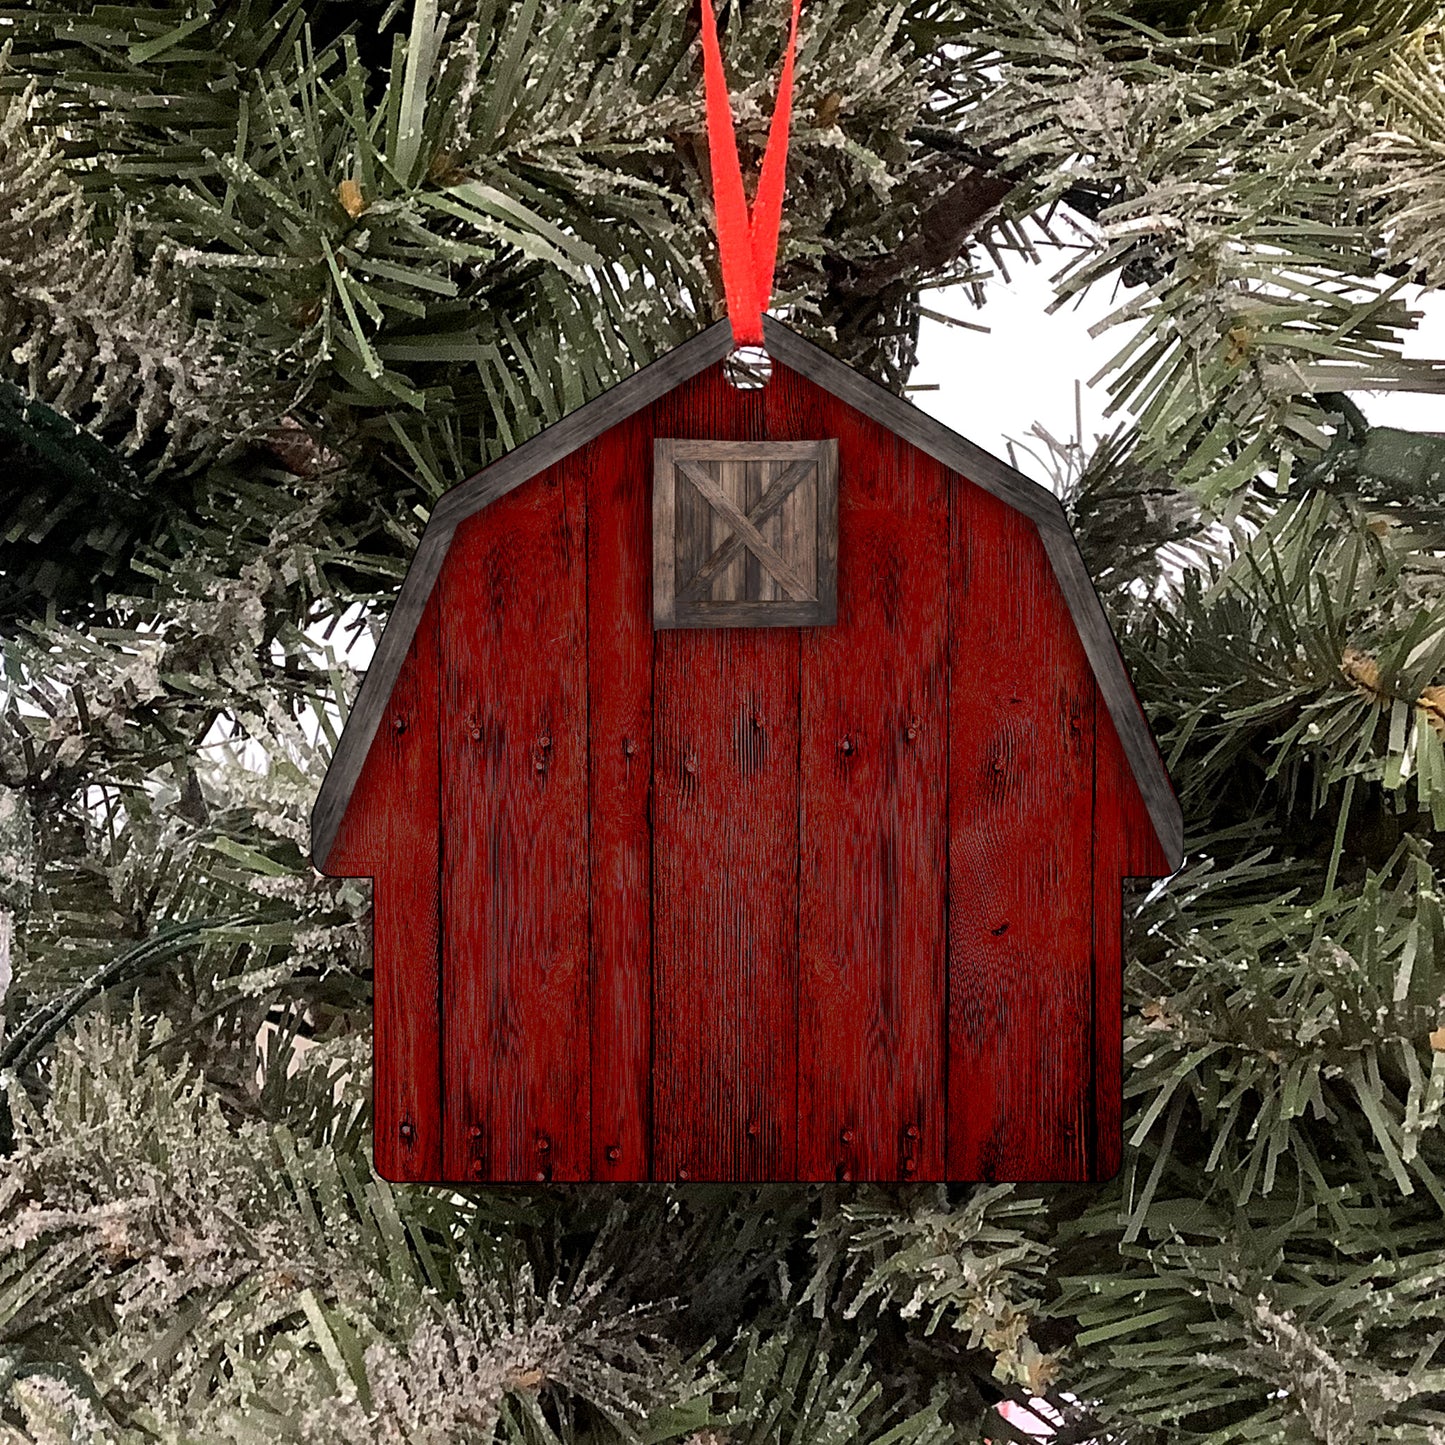 Ornament Red Barn - Christmas 2022